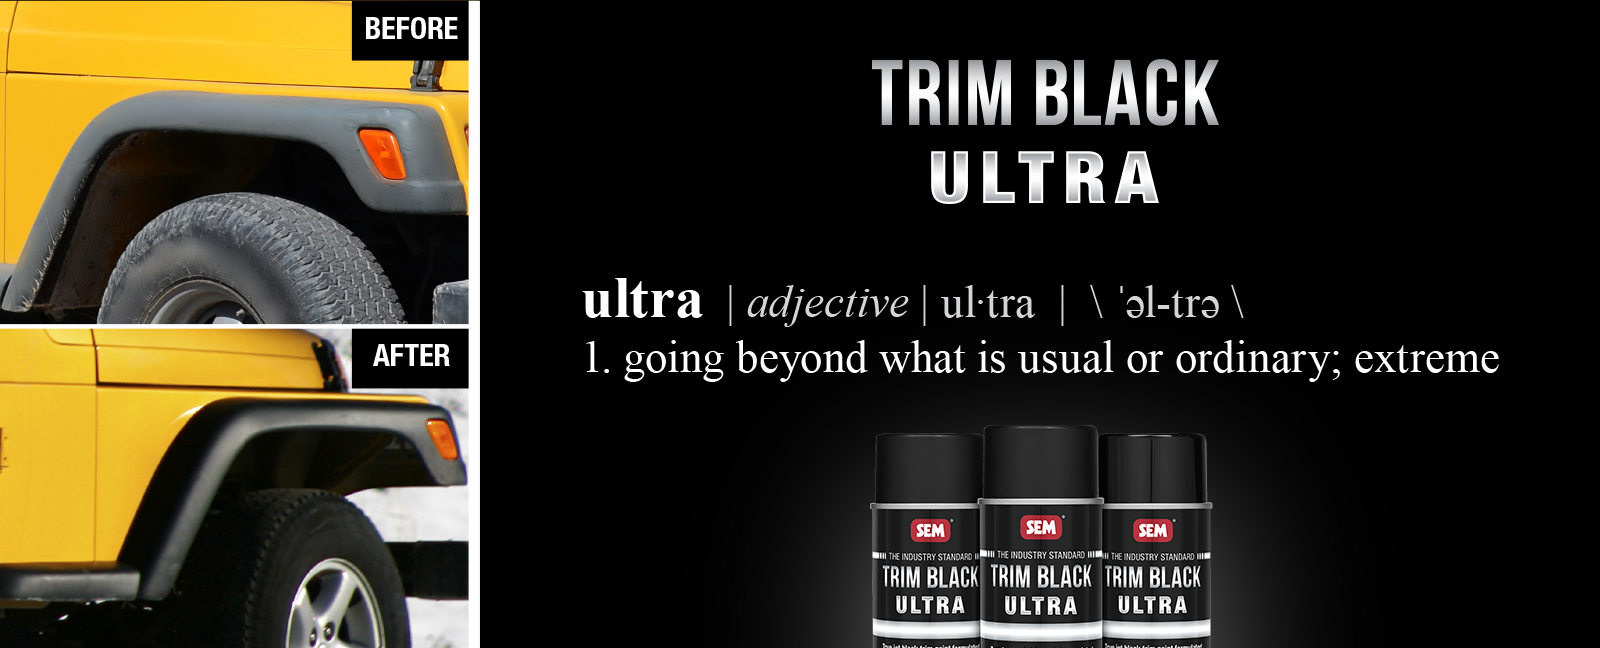 Trim Black Ultra Product Release